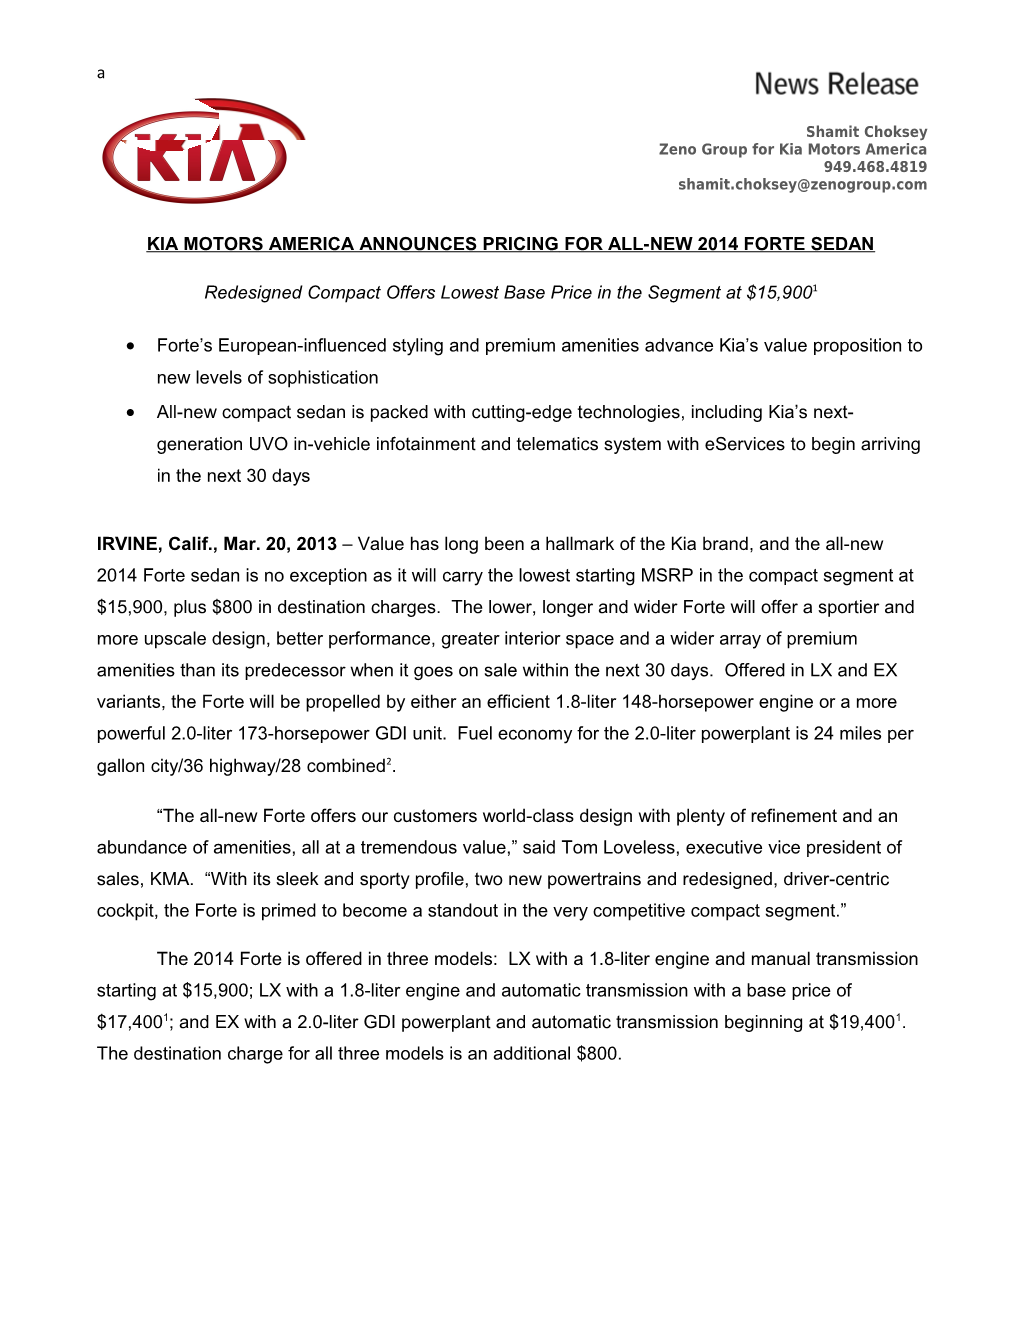 Kia Motors America Announces Pricing for All-New 2014 Forte Sedan